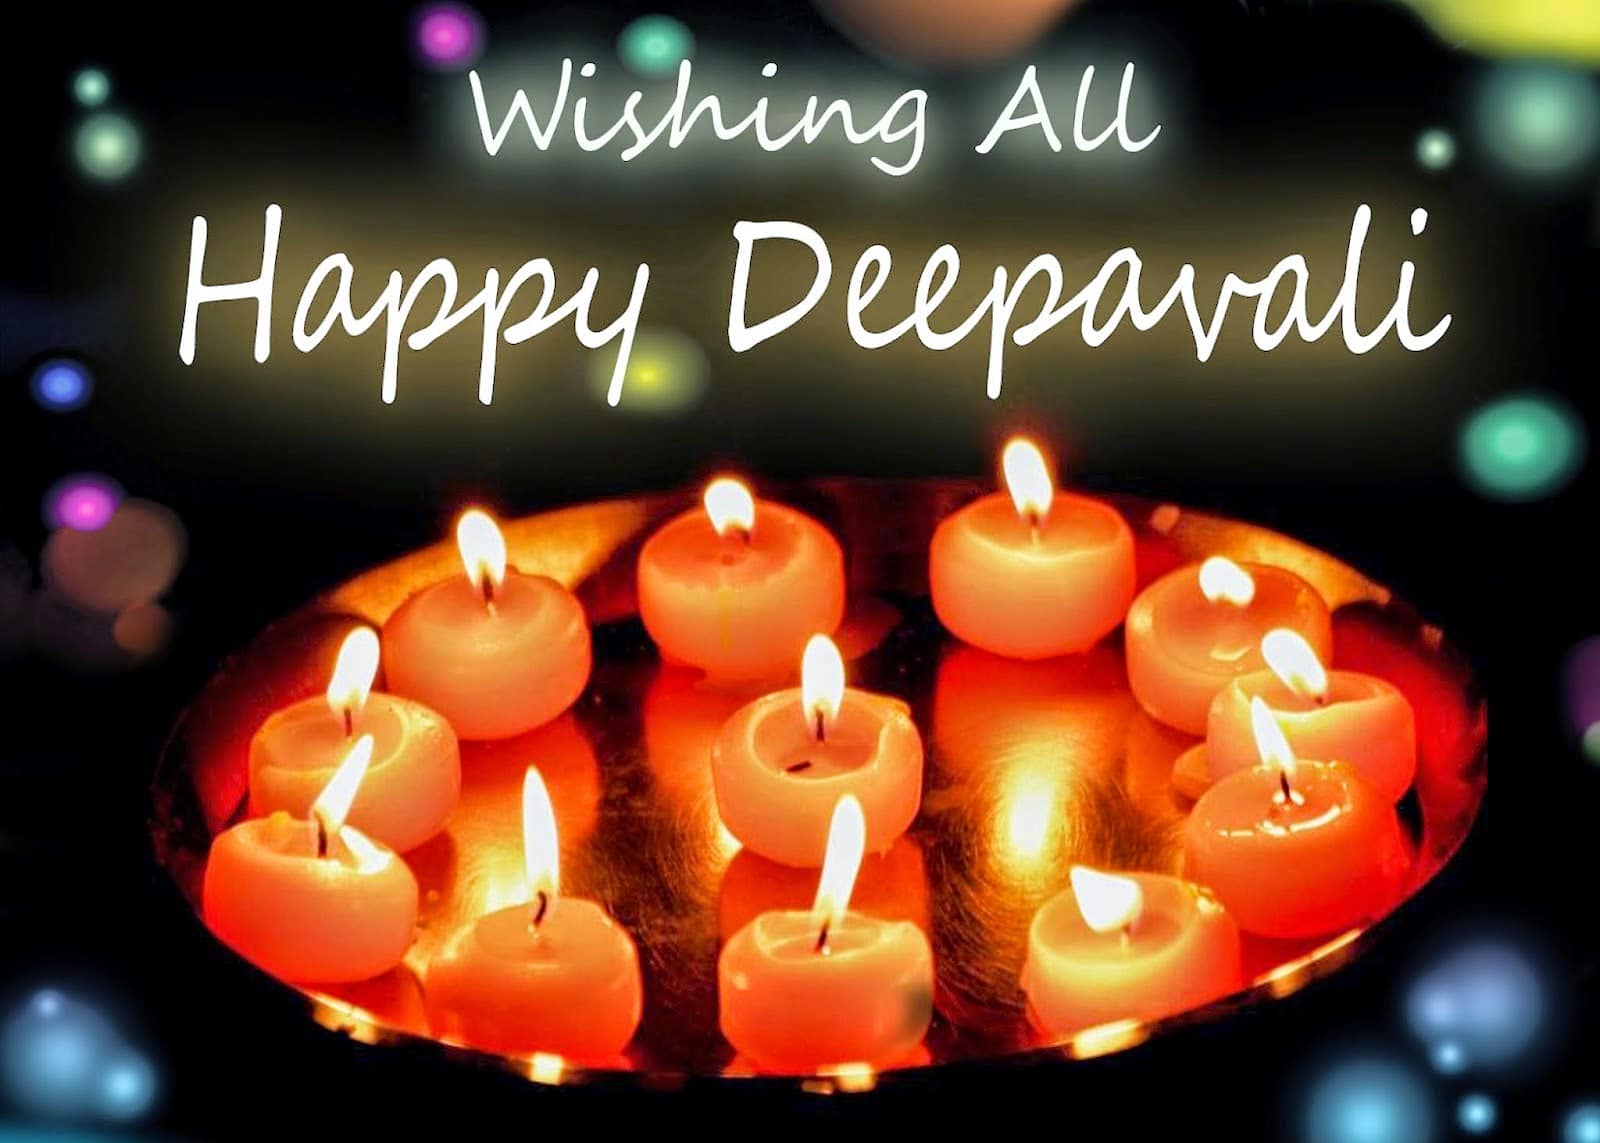 Happy Deepawali Wishes